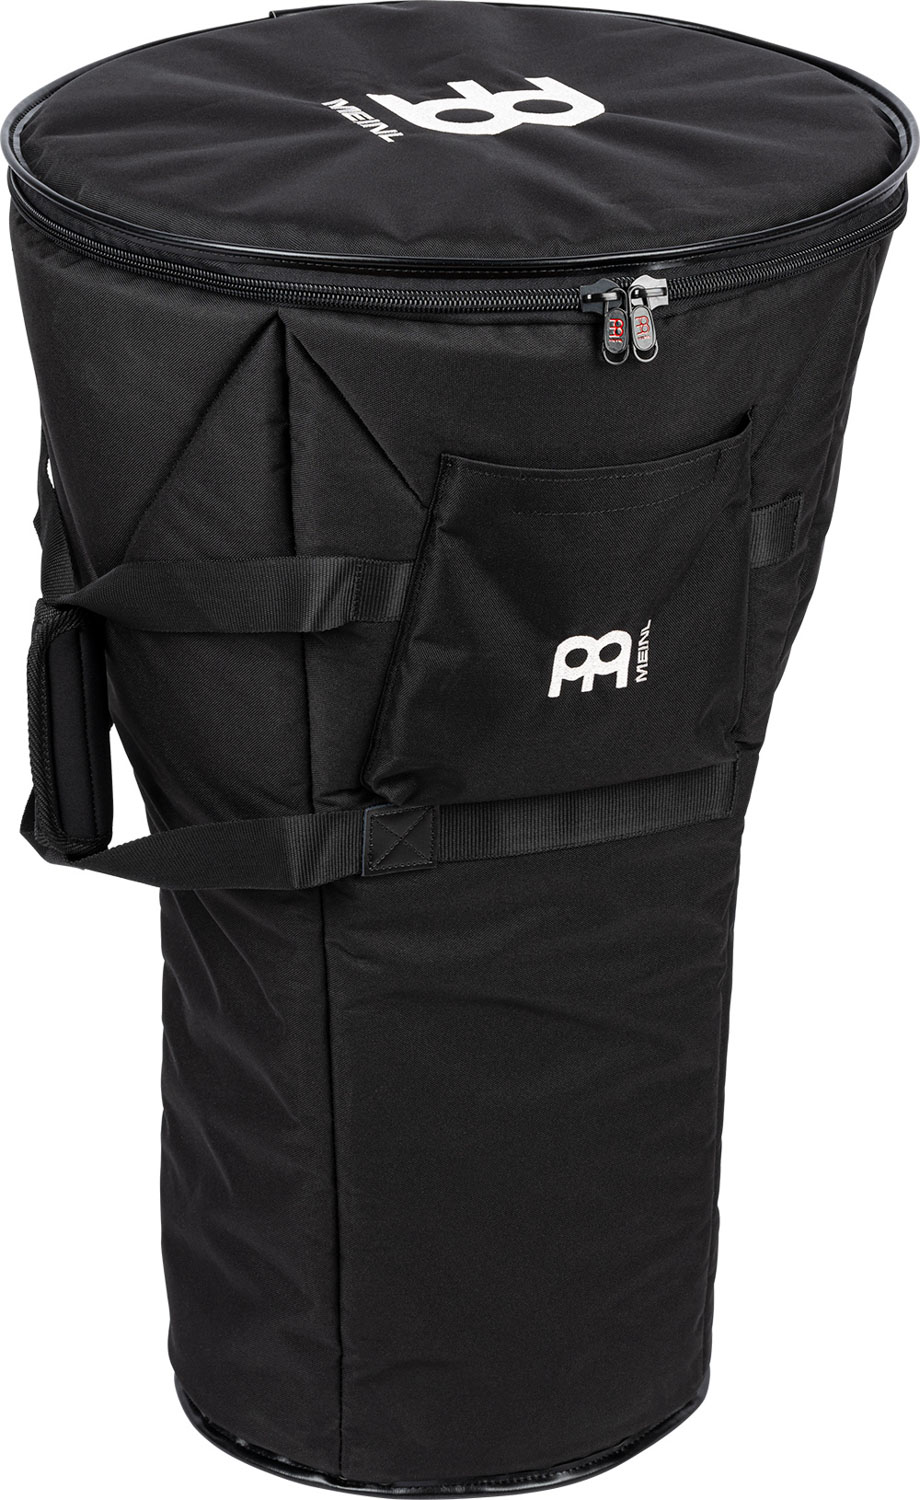 Meinl Professional Djembe Bag, X-Large - MDJB-XL.